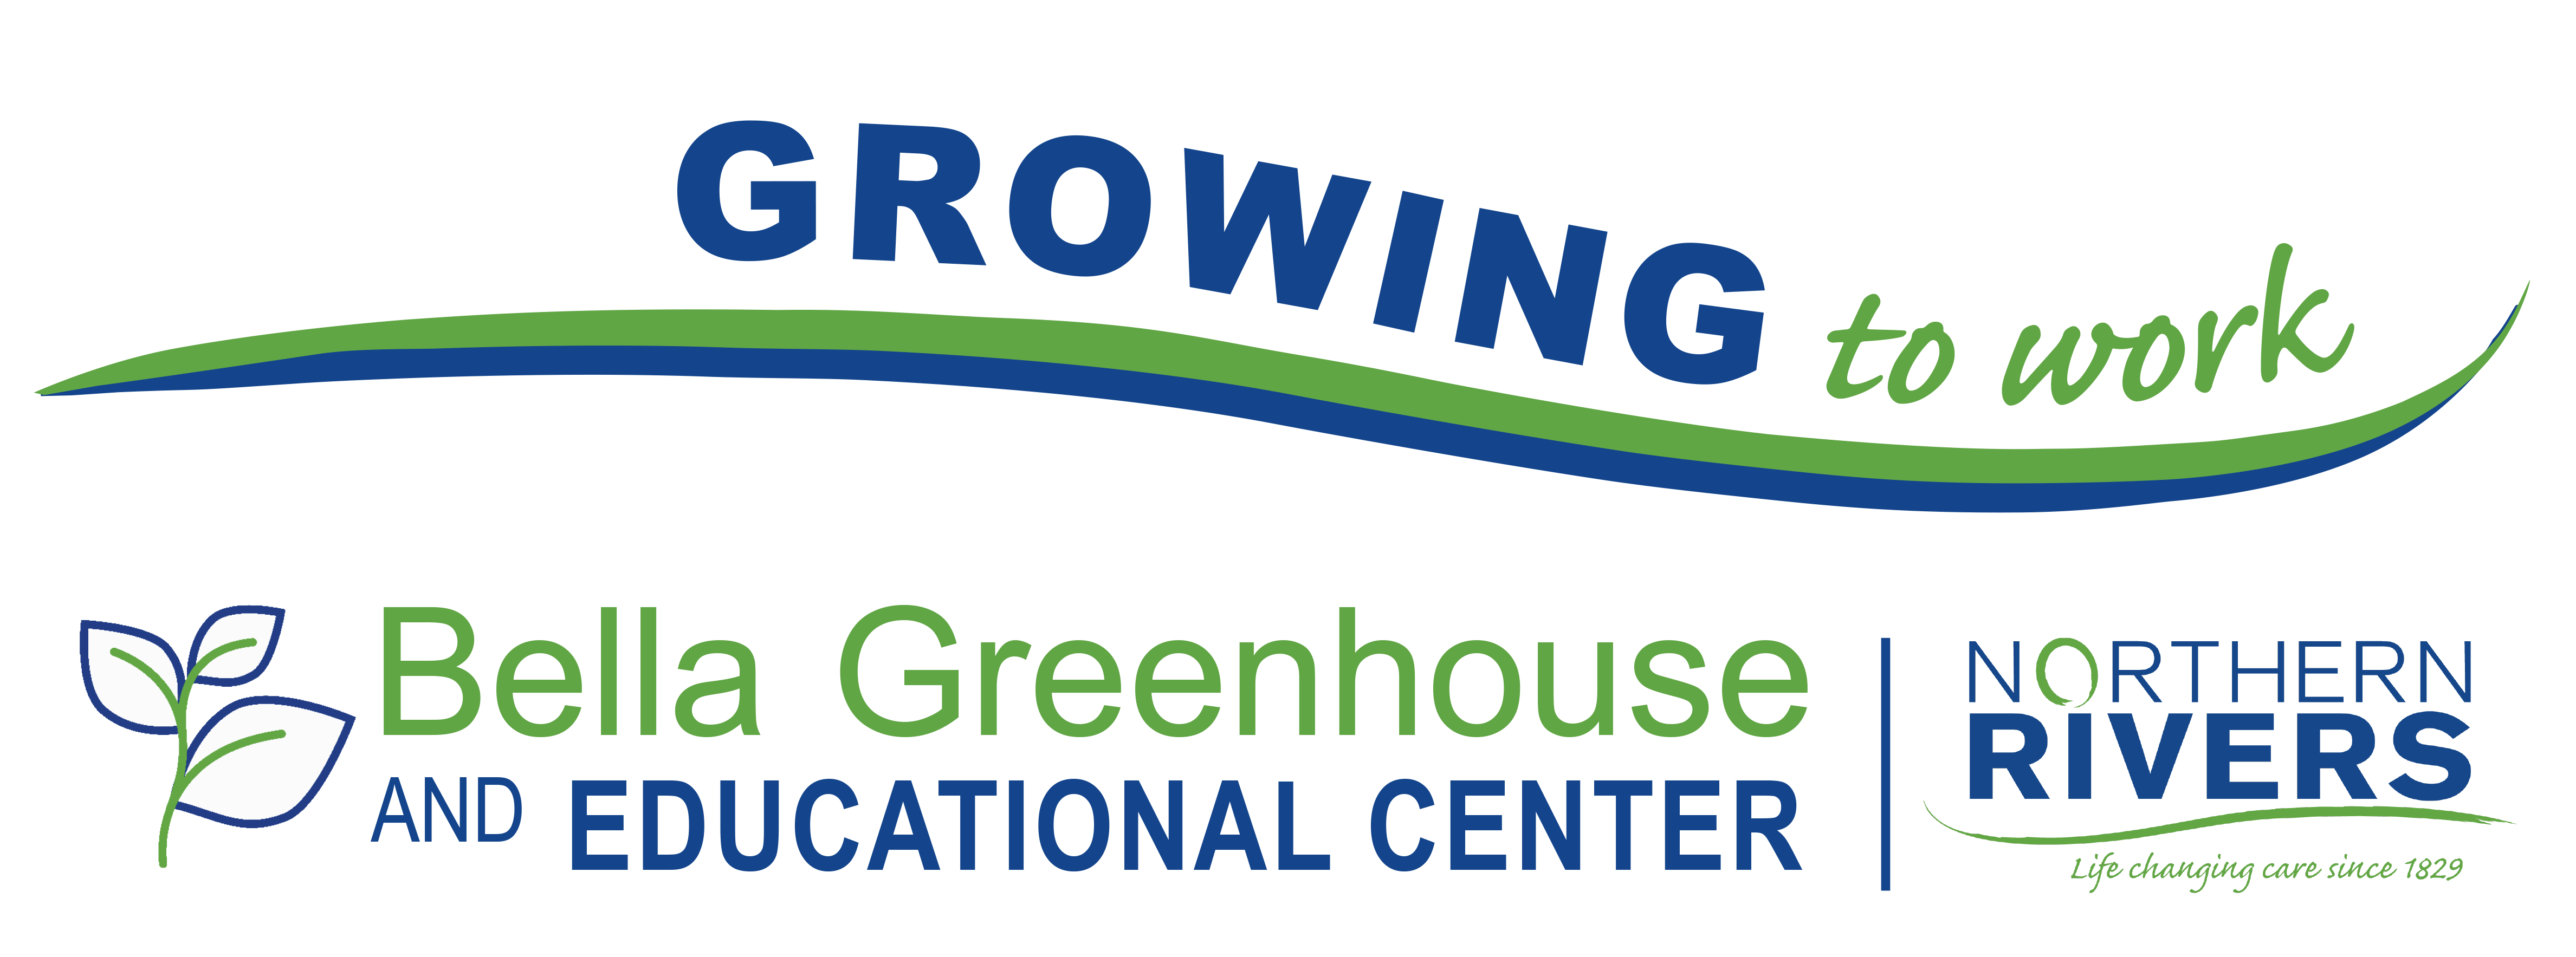 Bella Greenhouse & Educational Center